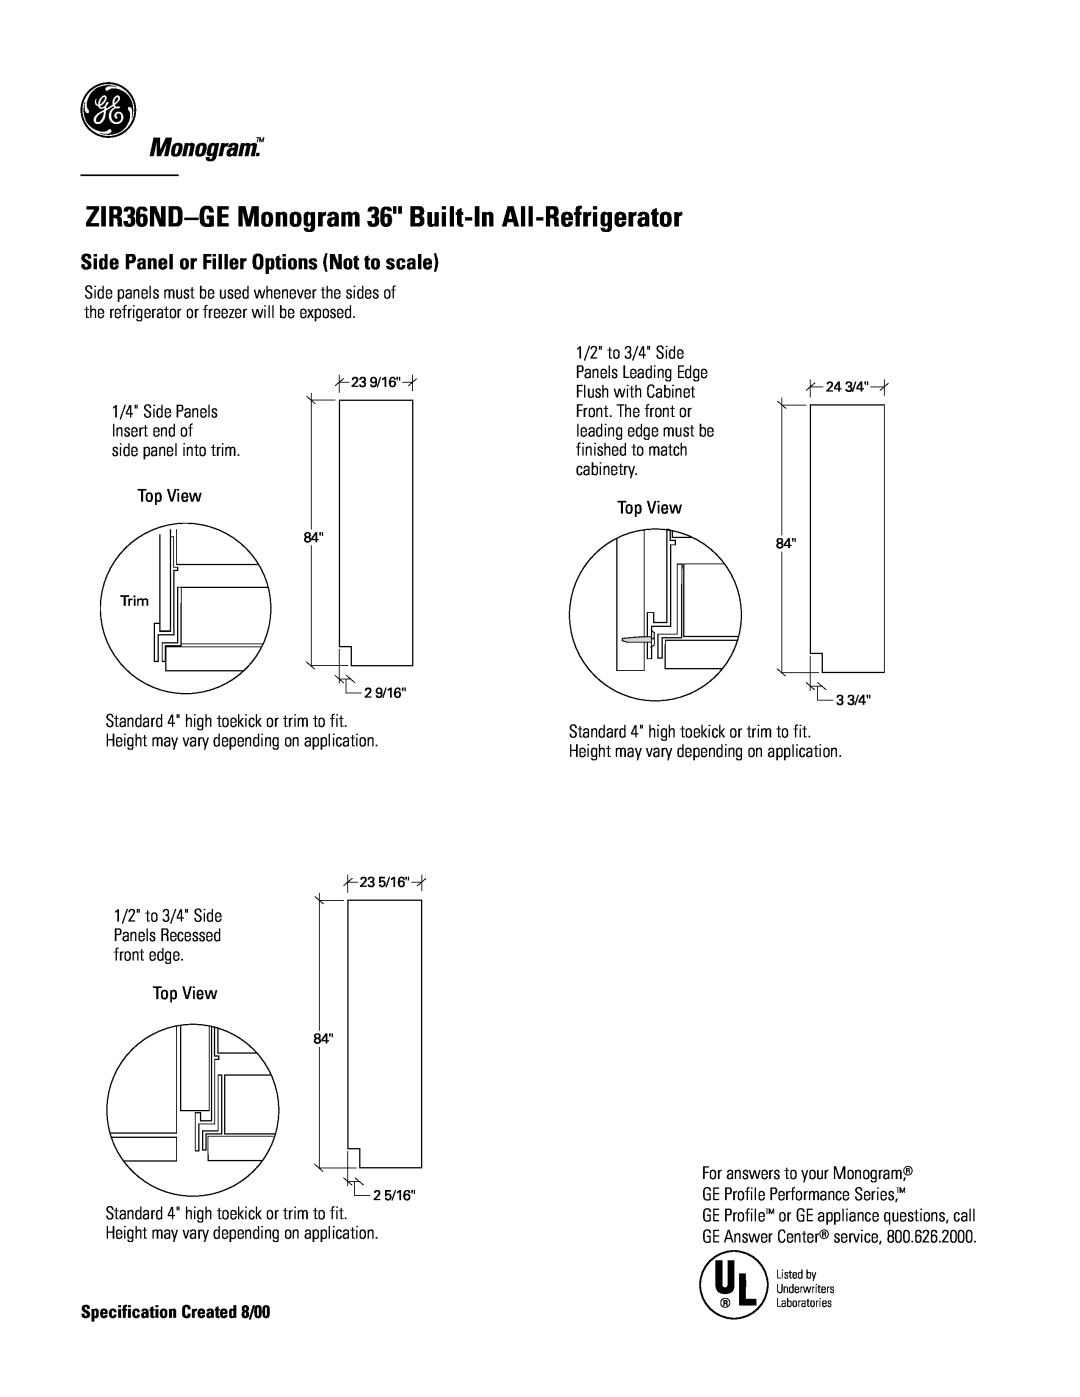 GE Monogram ZIR36NDGE ZIR36ND-GEMonogram 36 Built-In All-Refrigerator, Side Panel or Filler Options Not to scale, Top View 